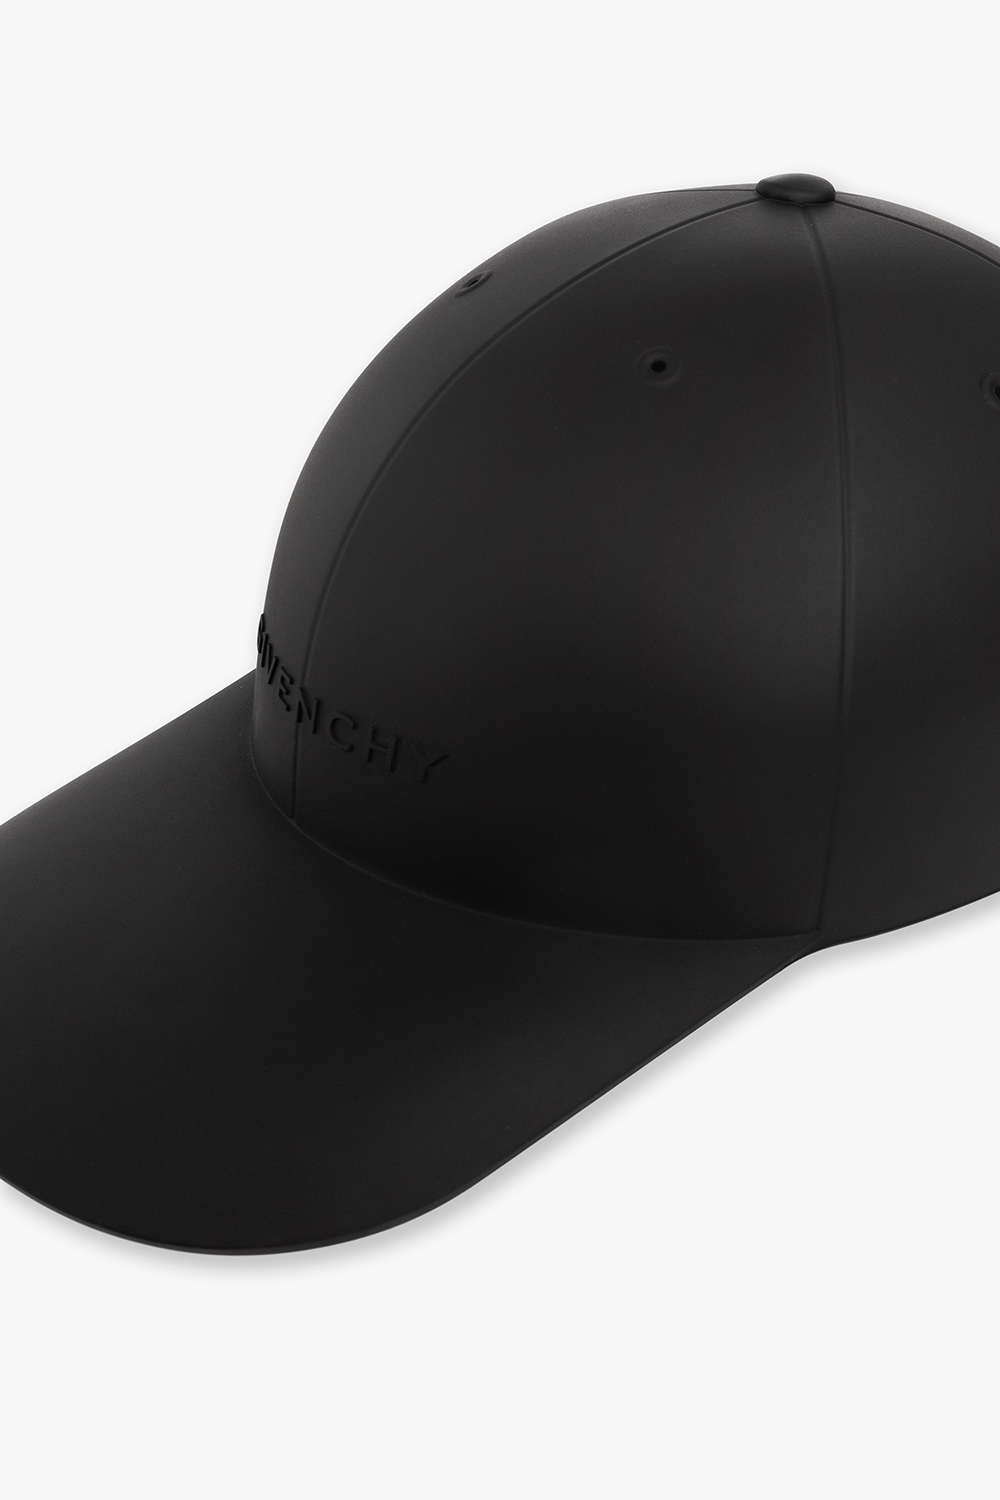 Givenchy Rubber baseball cap